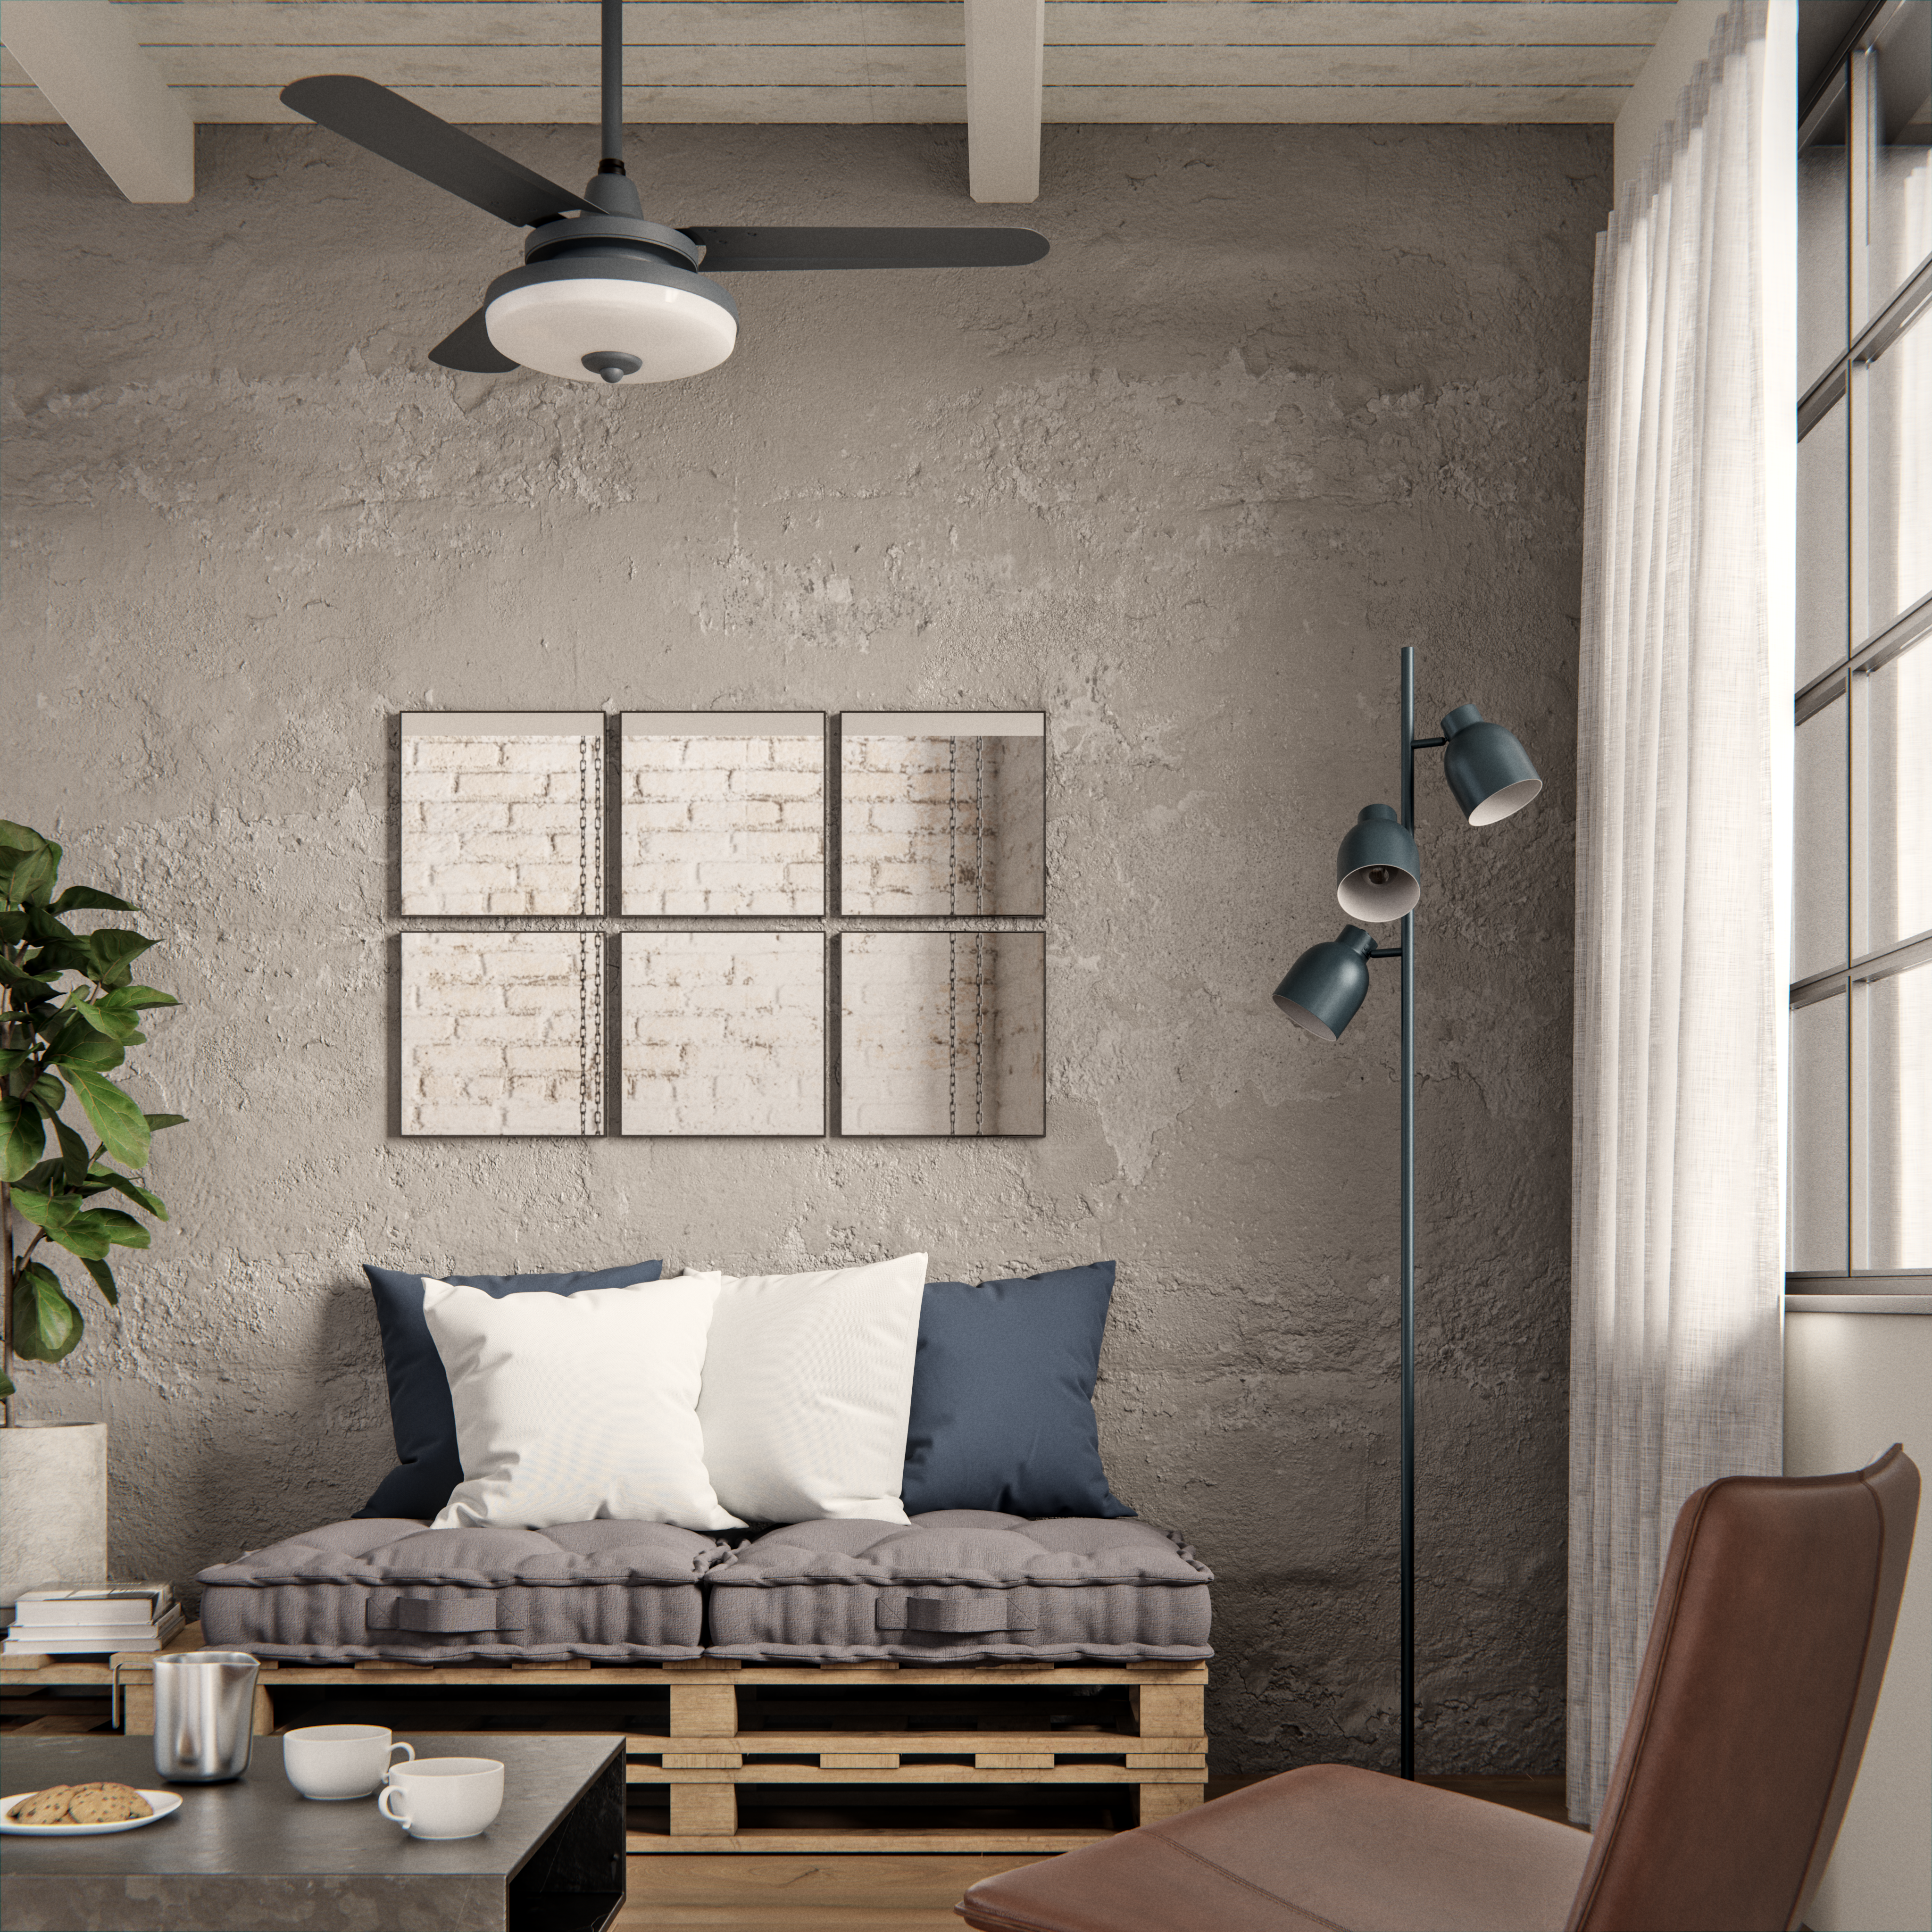 Qué cojines combinan con un sofá gris? – Maison Decor